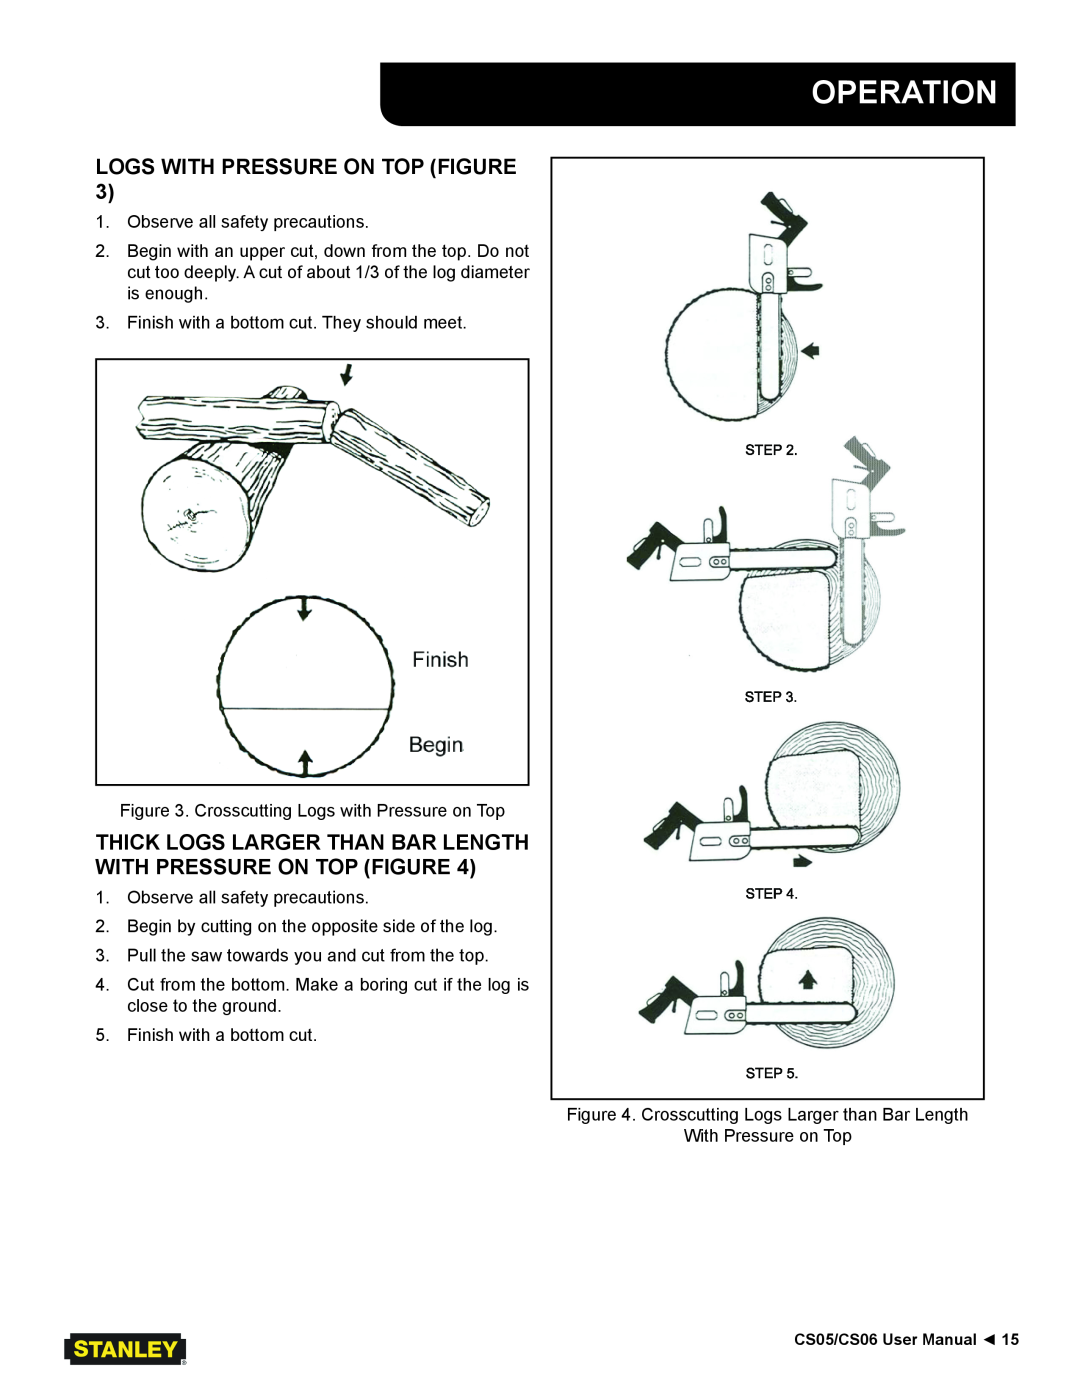 Stanley Black & Decker CS05/CS06 user manual Logs With Pressure On Top Figure, Operation 